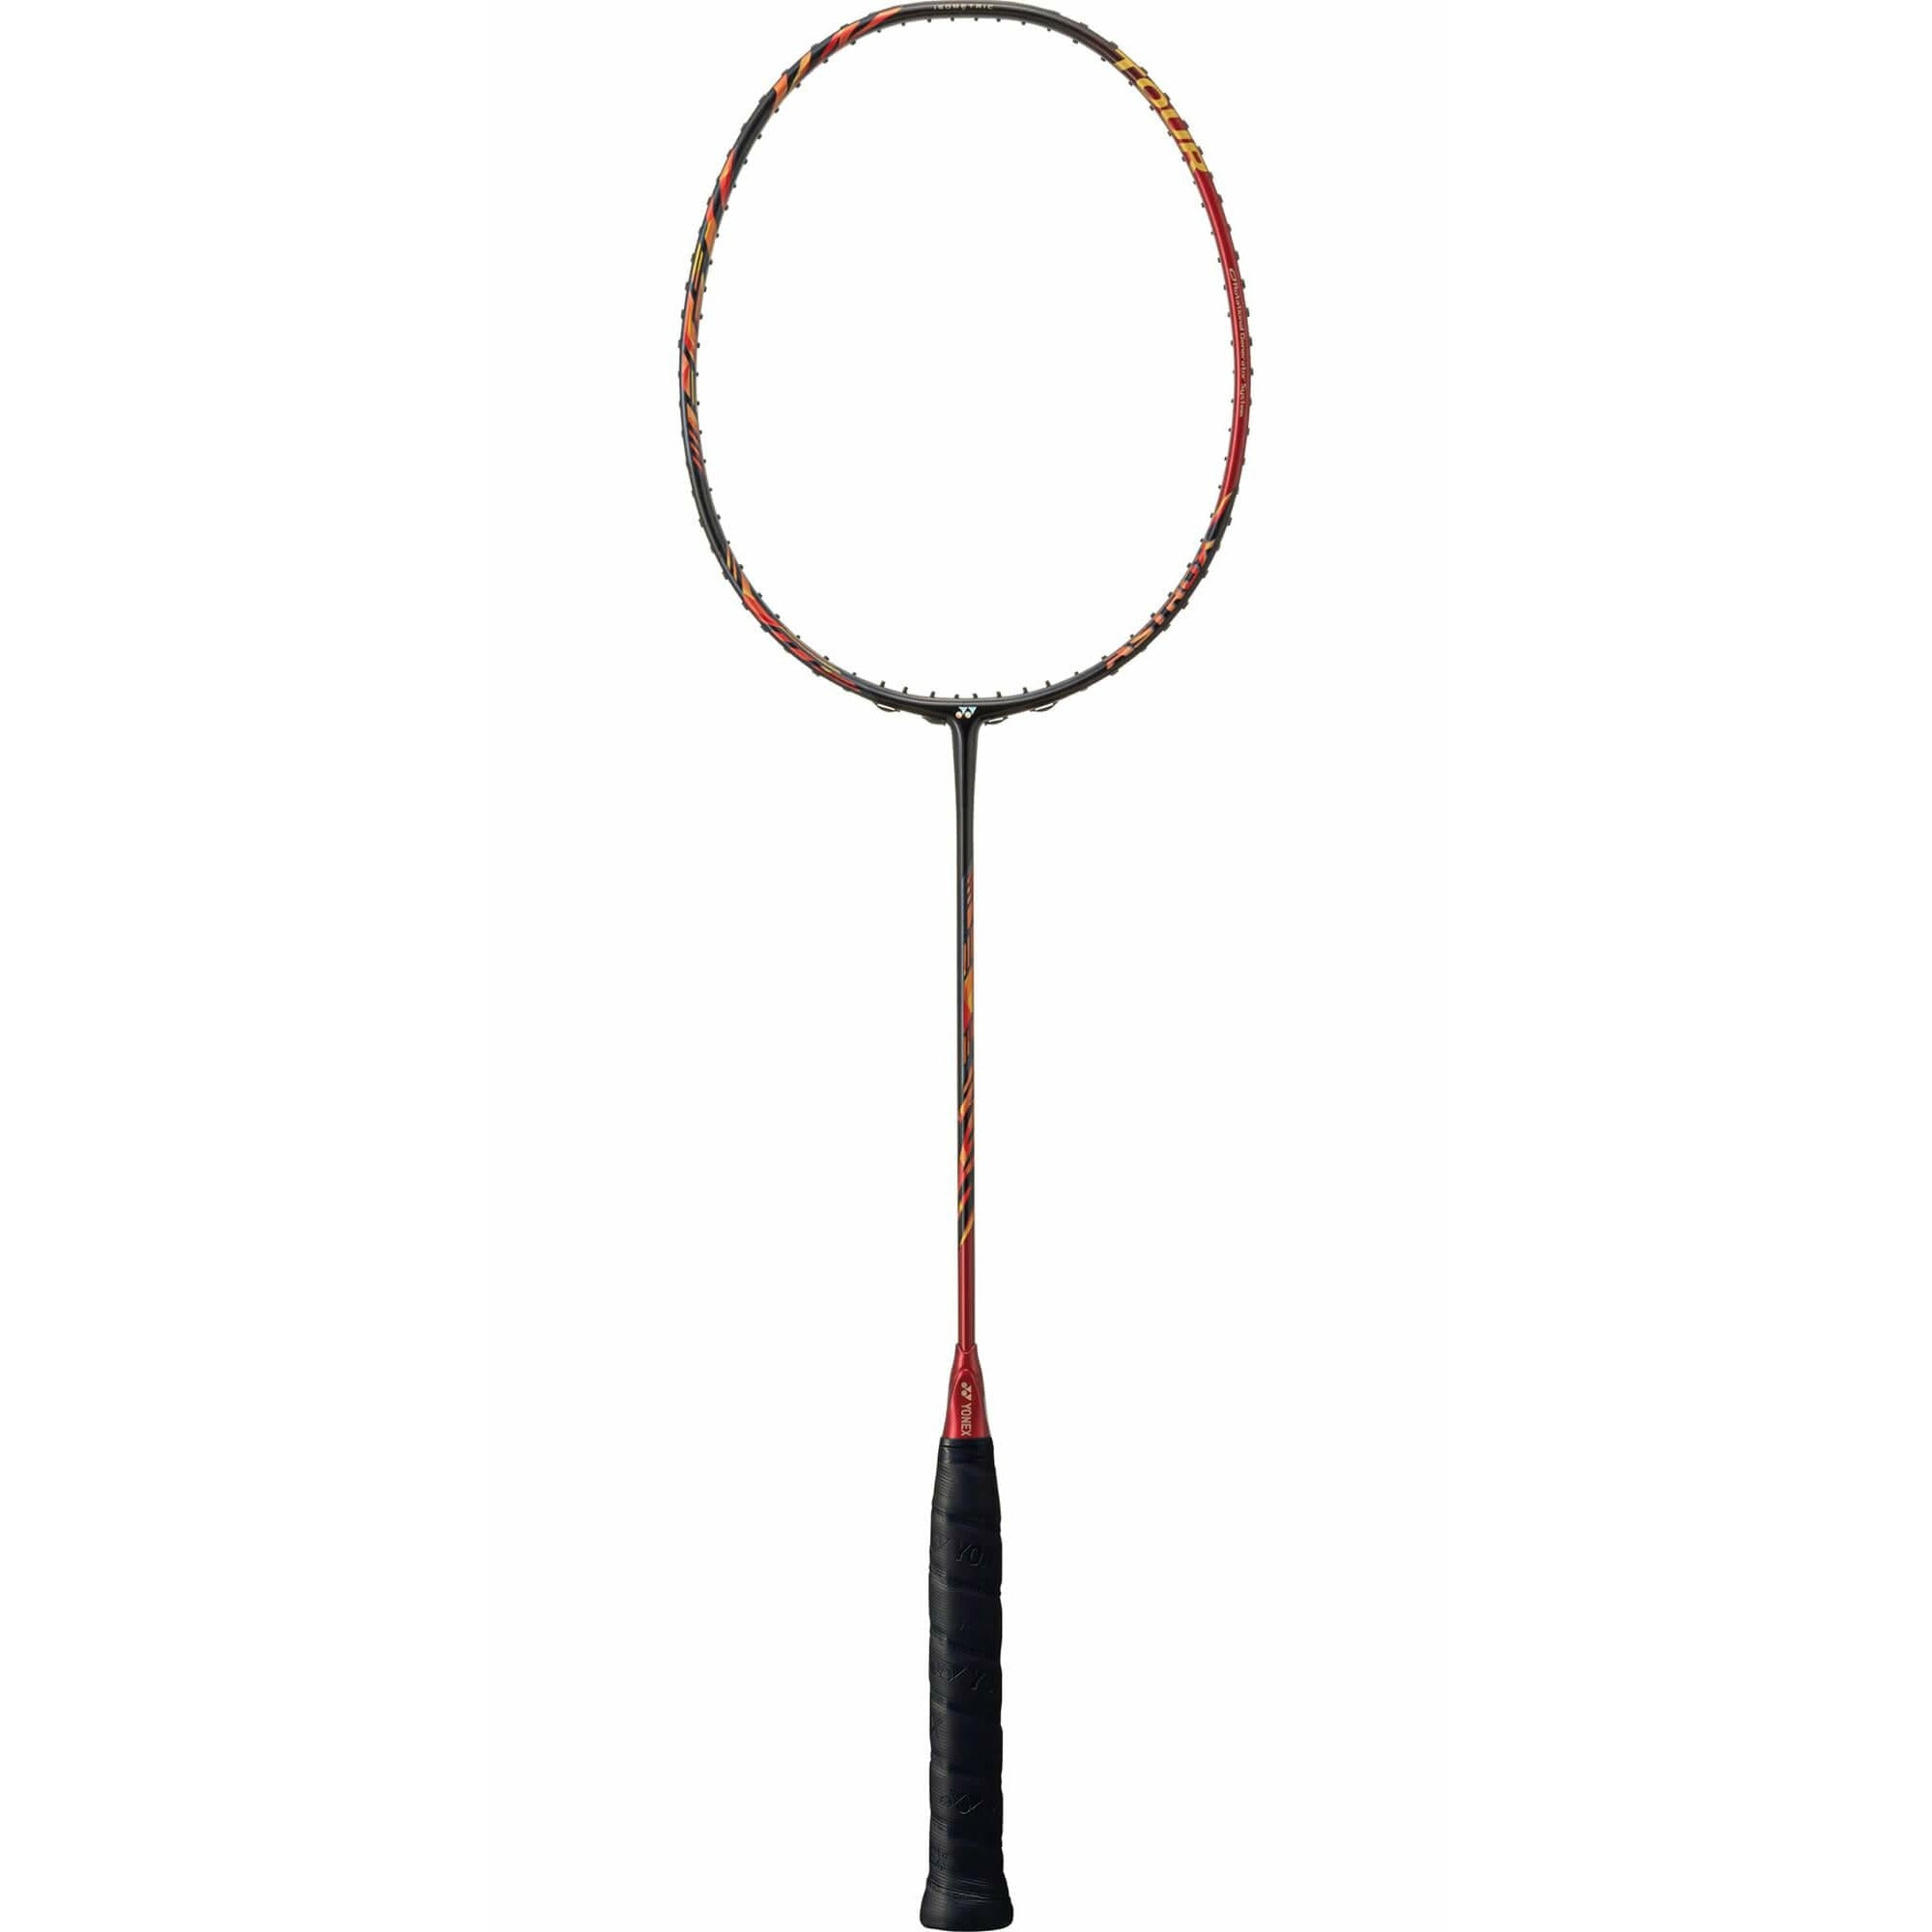 Yonex Astrox 99 Tour Badminton Racket - Cherry/Sunburst [Strung]